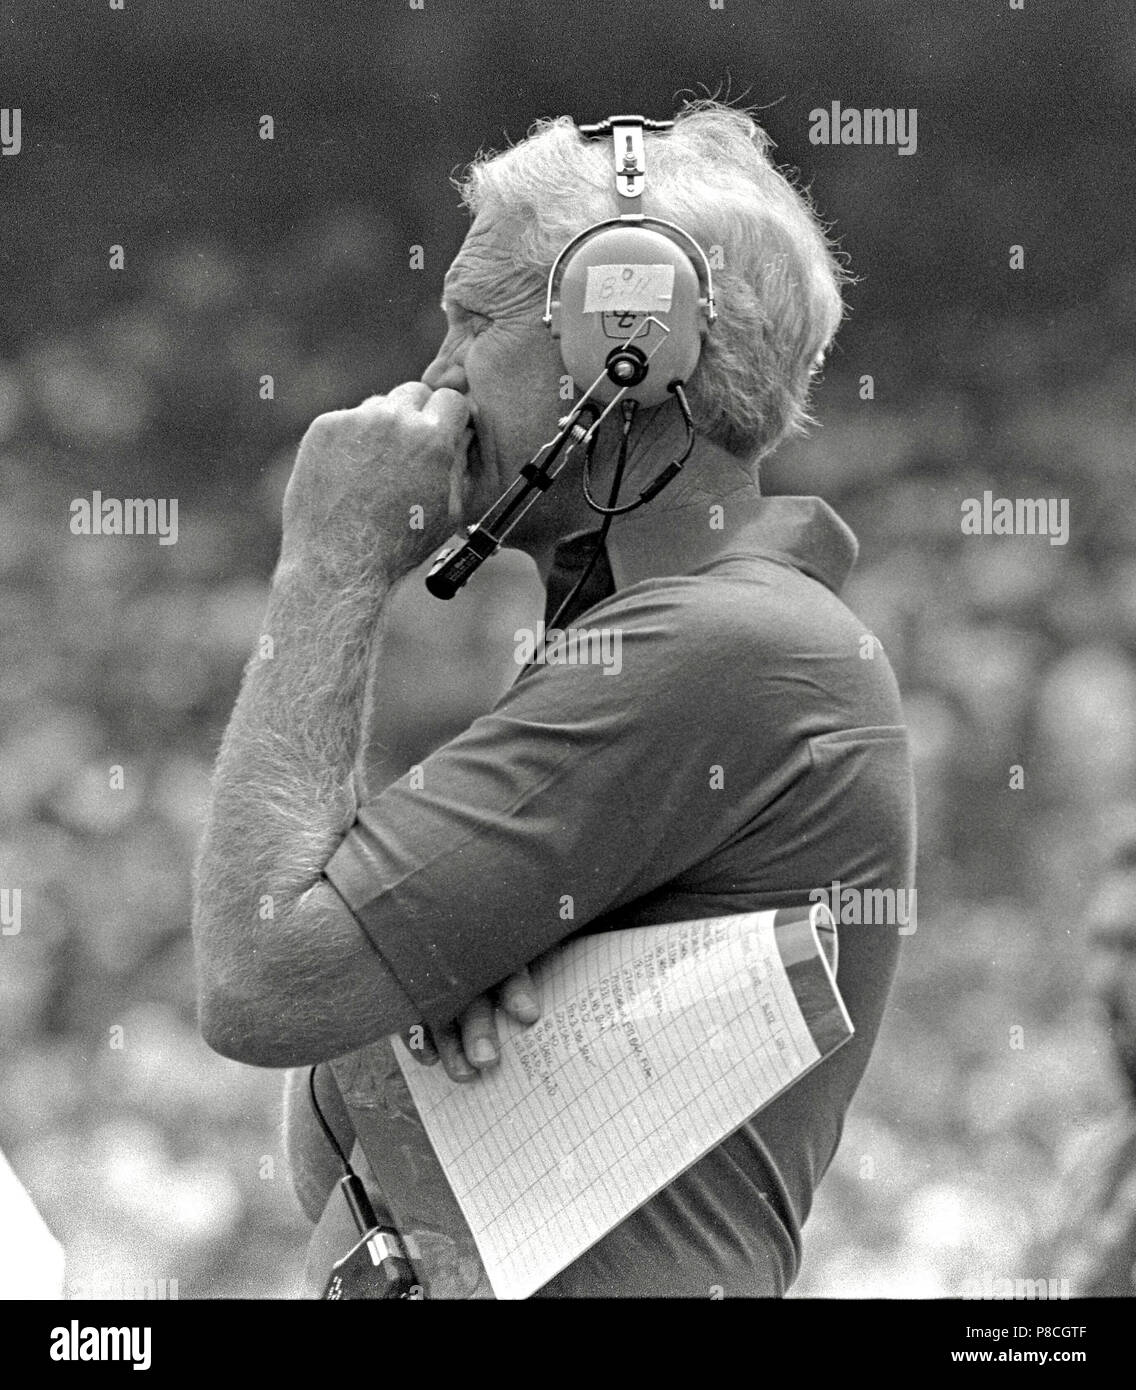 San Francisco, California, USA. 14th Aug, 1983. San Francisco 49ers vs. New England Patriots at Candlestick Park Sunday, August 14, 1983. Pre-season Game. 49er Head Coach Bill Walsh. Credit: Al Golub/ZUMA Wire/Alamy Live News Stock Photo